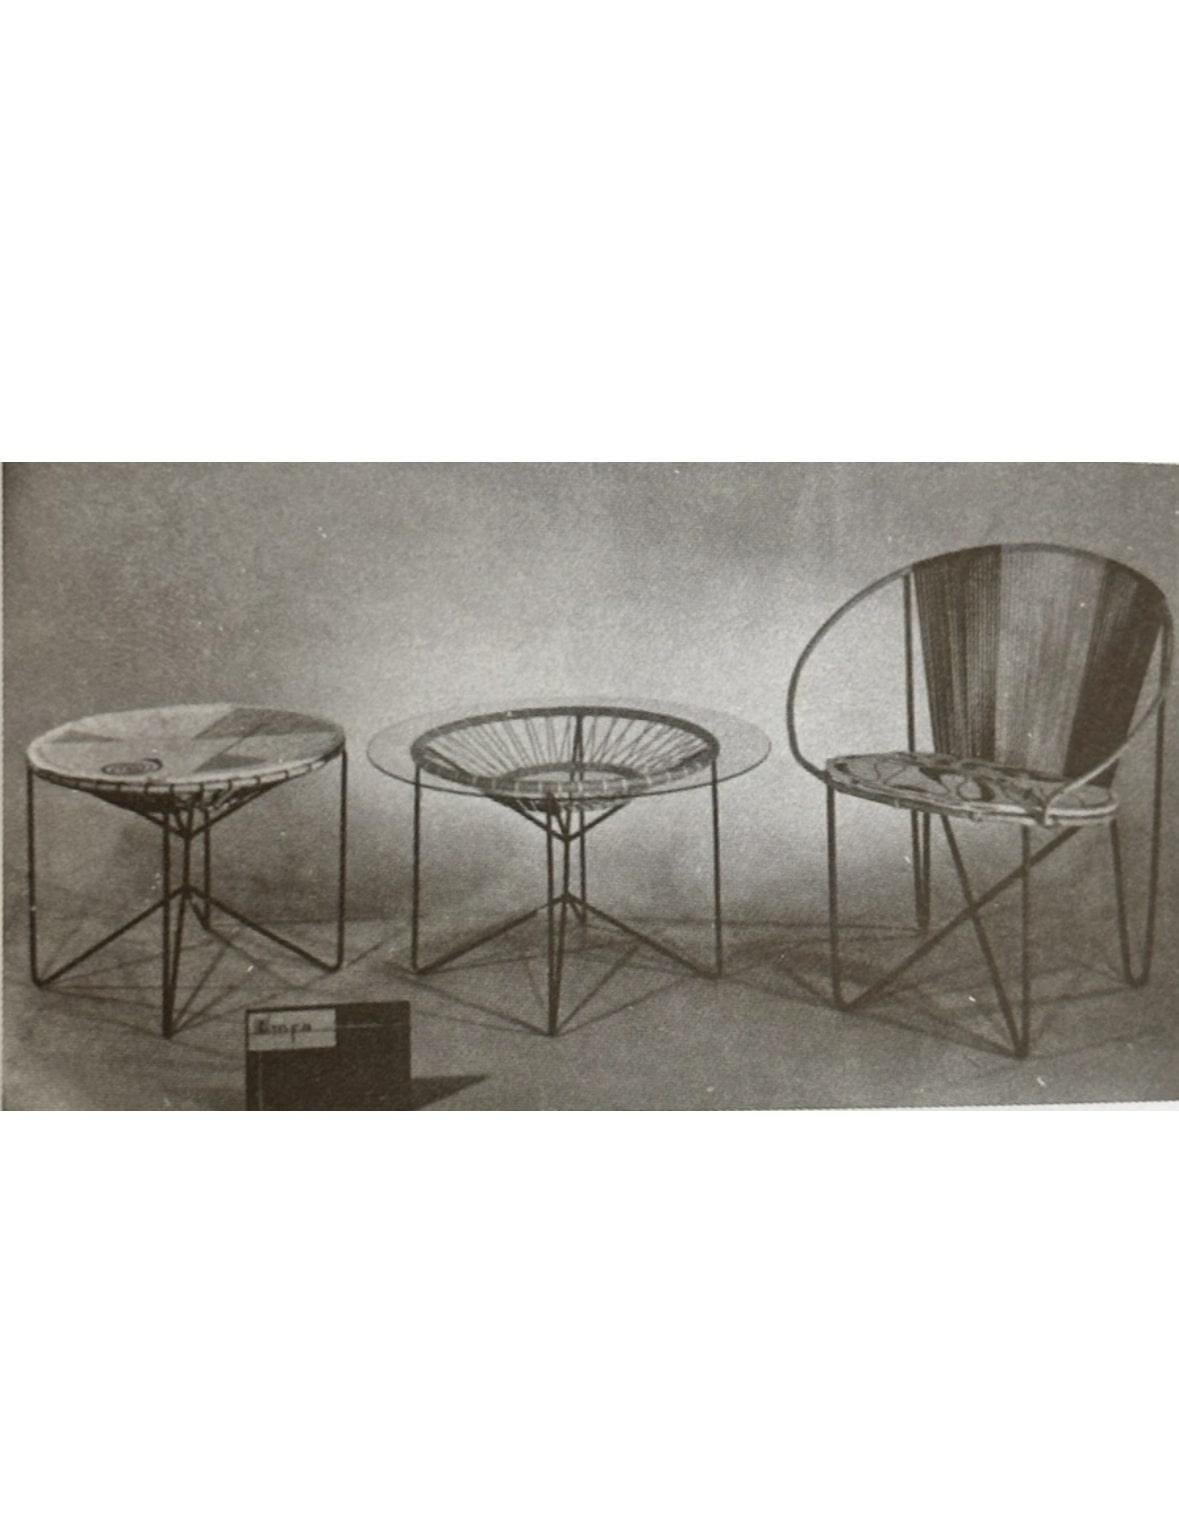 Brazilian Zanine Caldas for INFA. Mid-Century Modern Pair of Iron Chairs For Sale